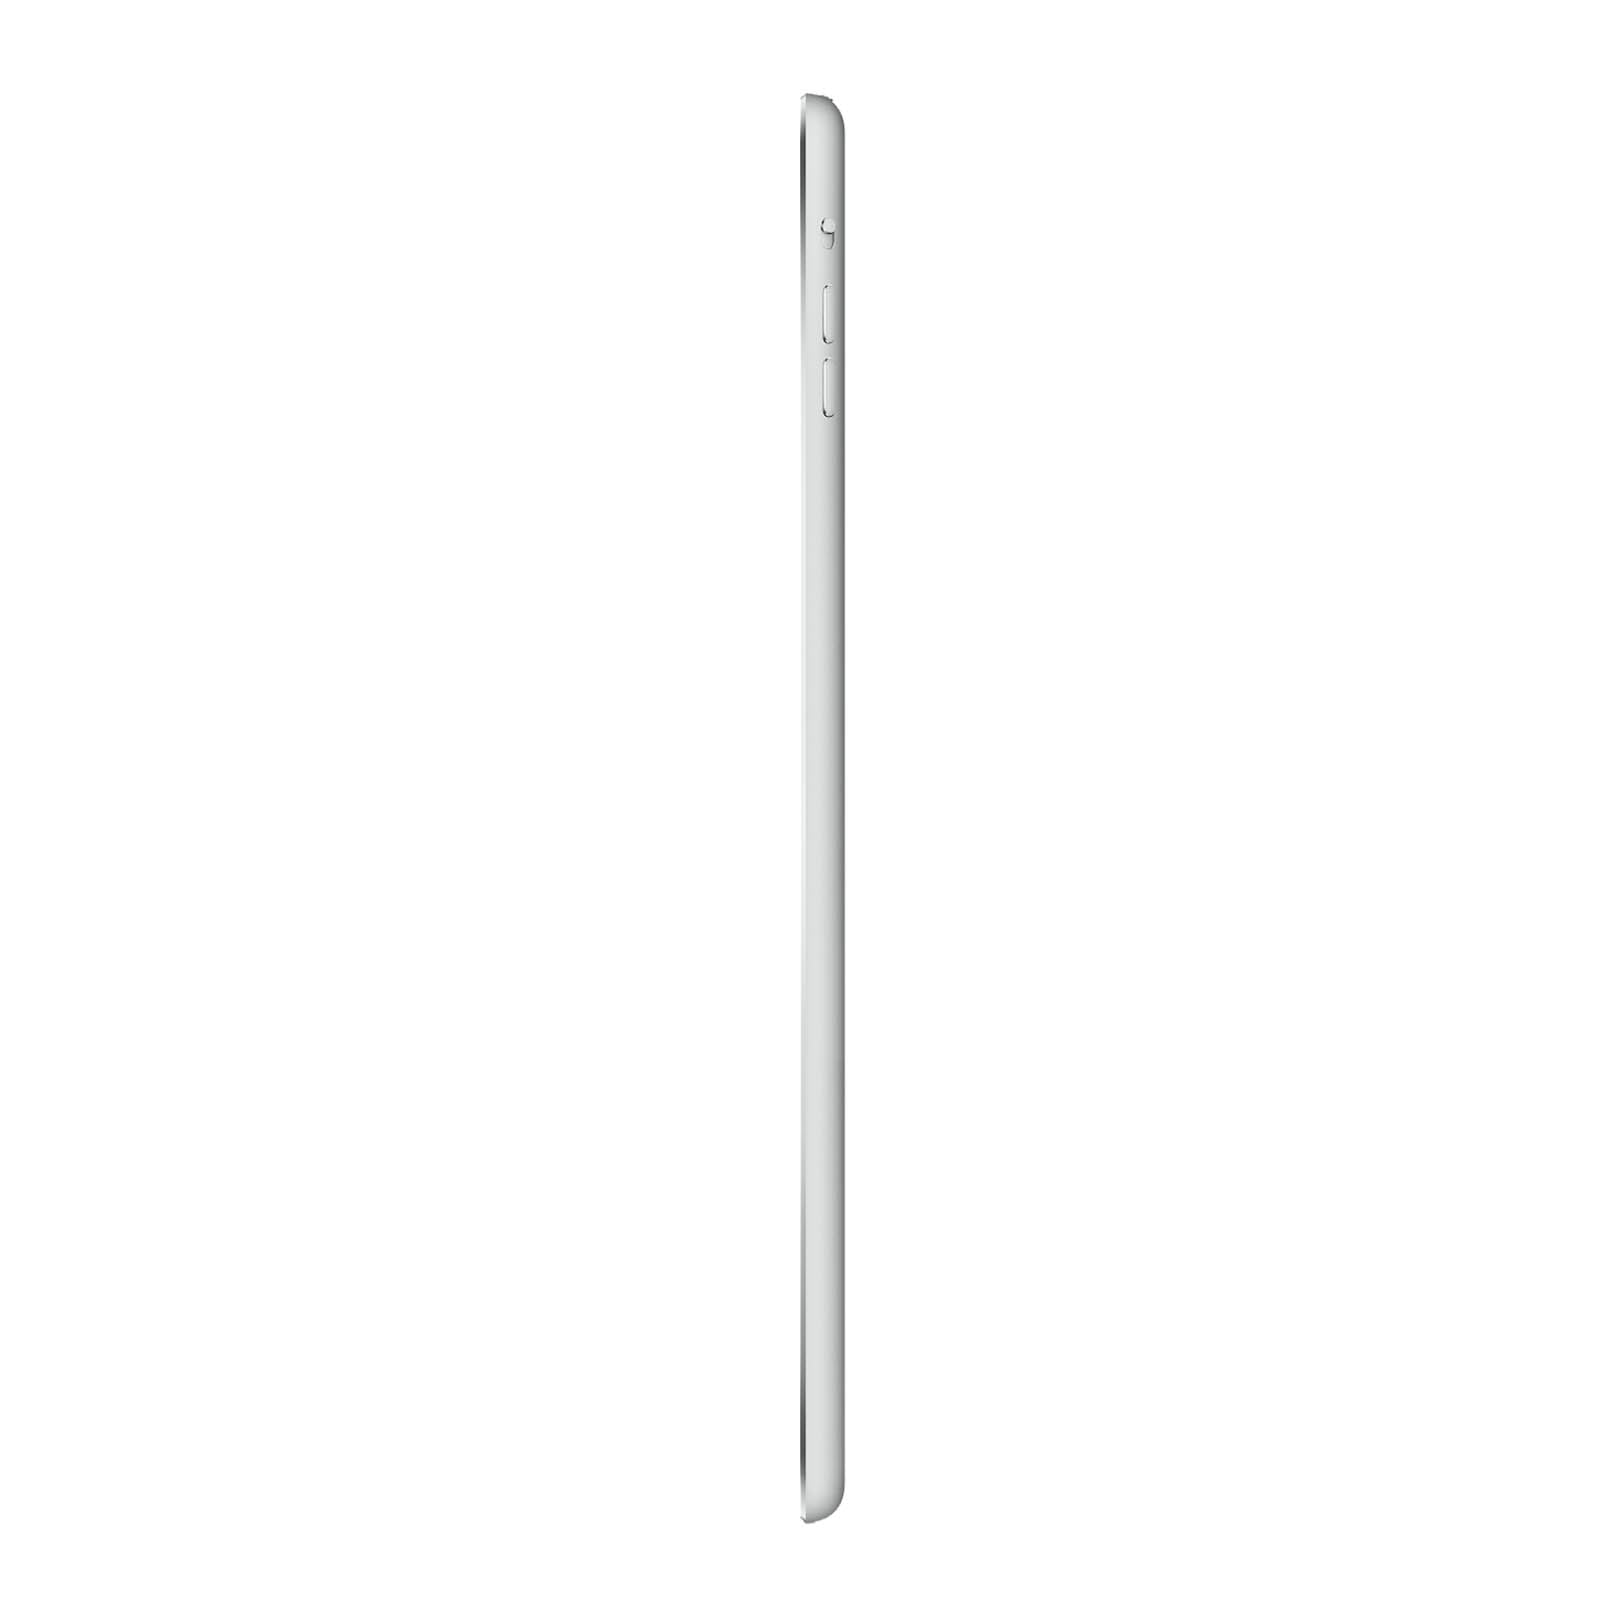 iPad Air 32GB WiFi Silver Good-Unlocked